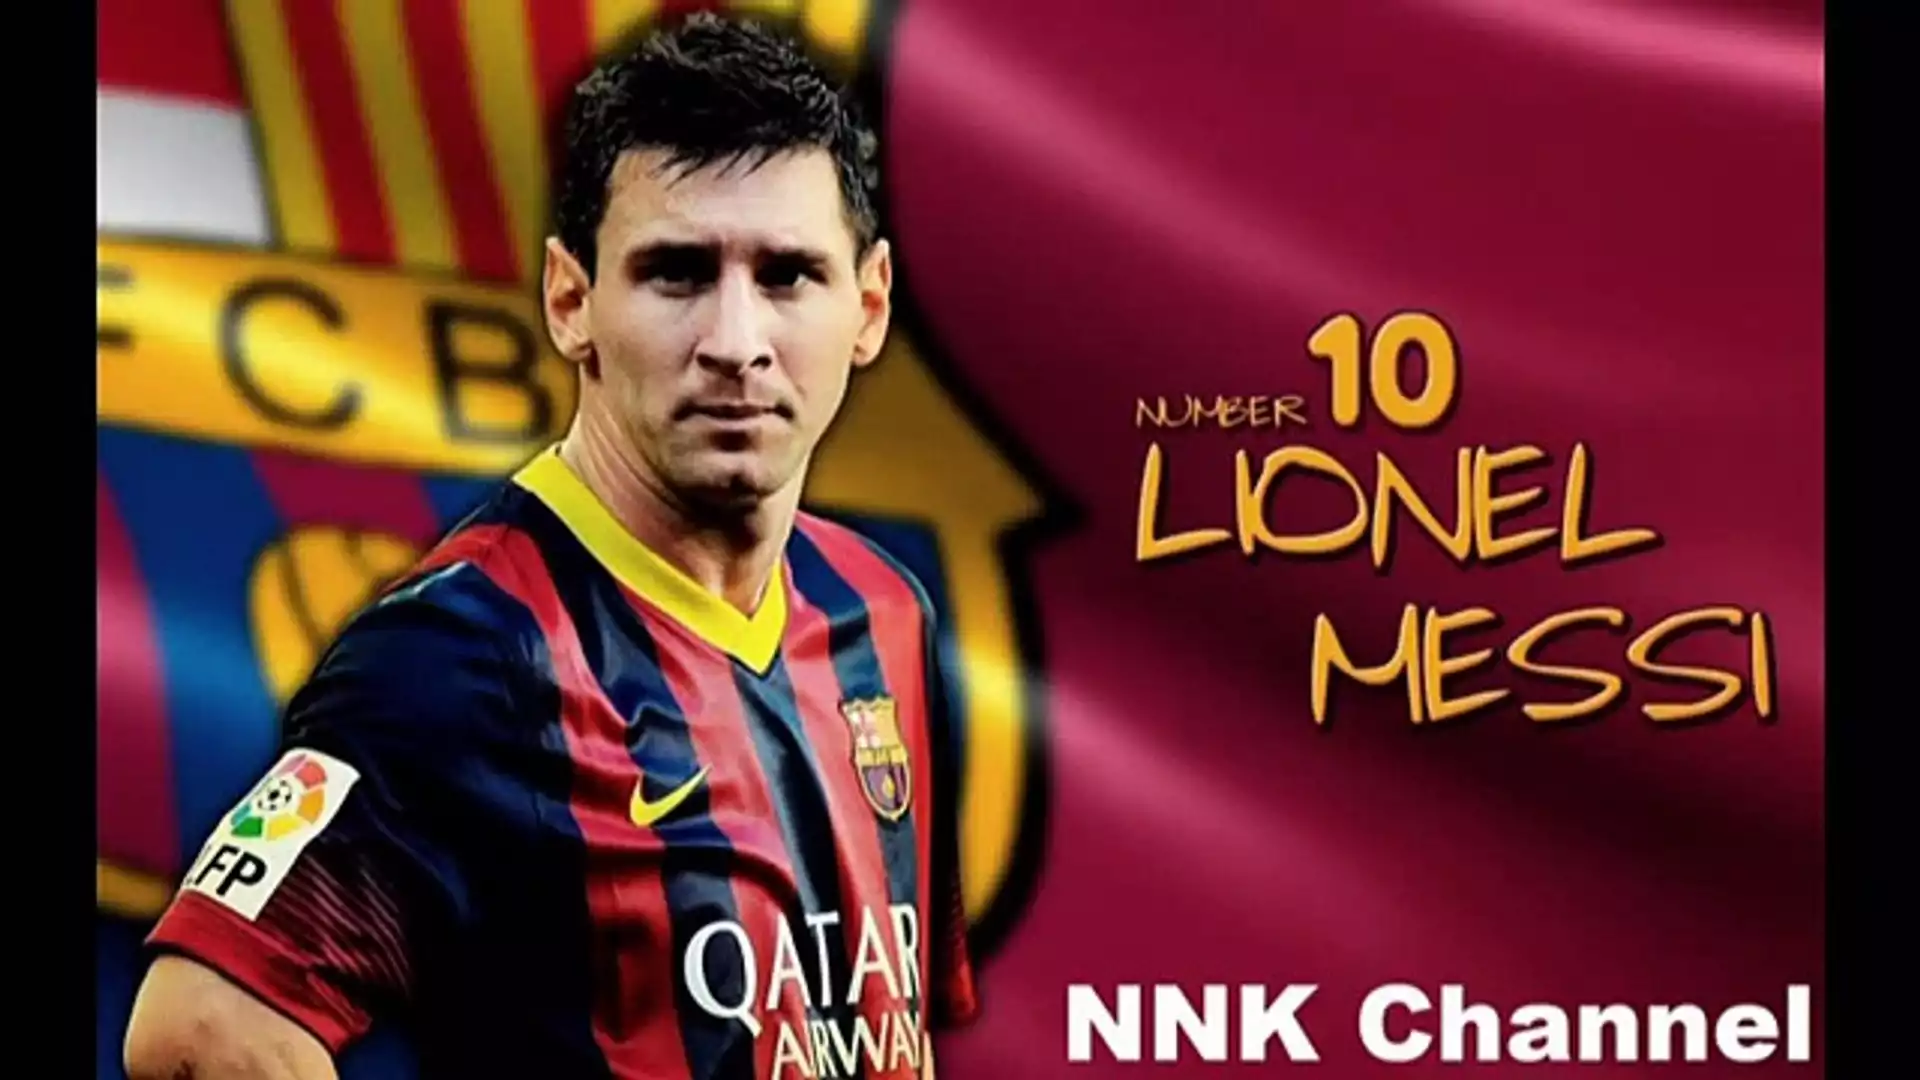 Lionel Messi: His Massive Imprint on The Champions League